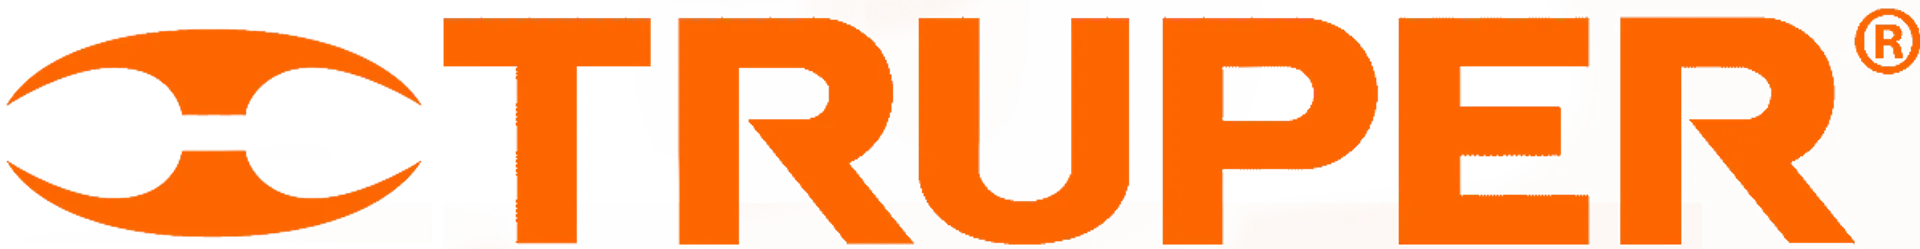 TRUPER logo